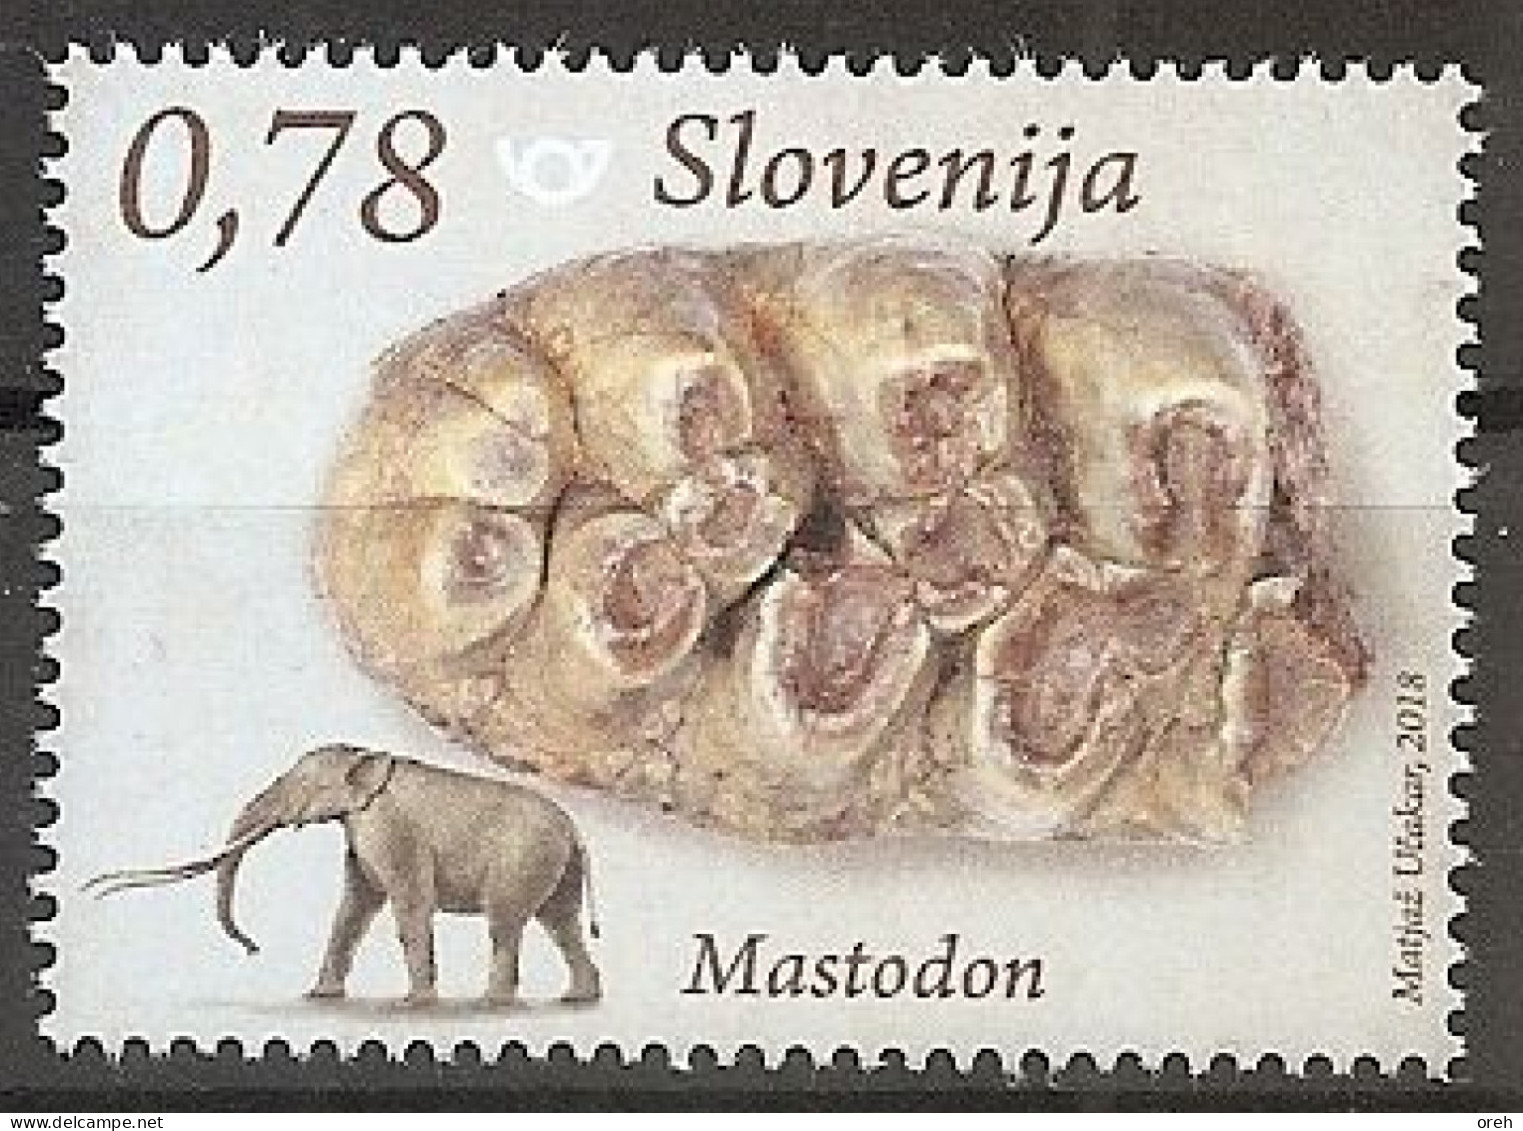 SLOVENIA 2018,new 23.3.,FOSSIL MAMMALS OF SLOVENIA,MASTODON,MNH - Fossils